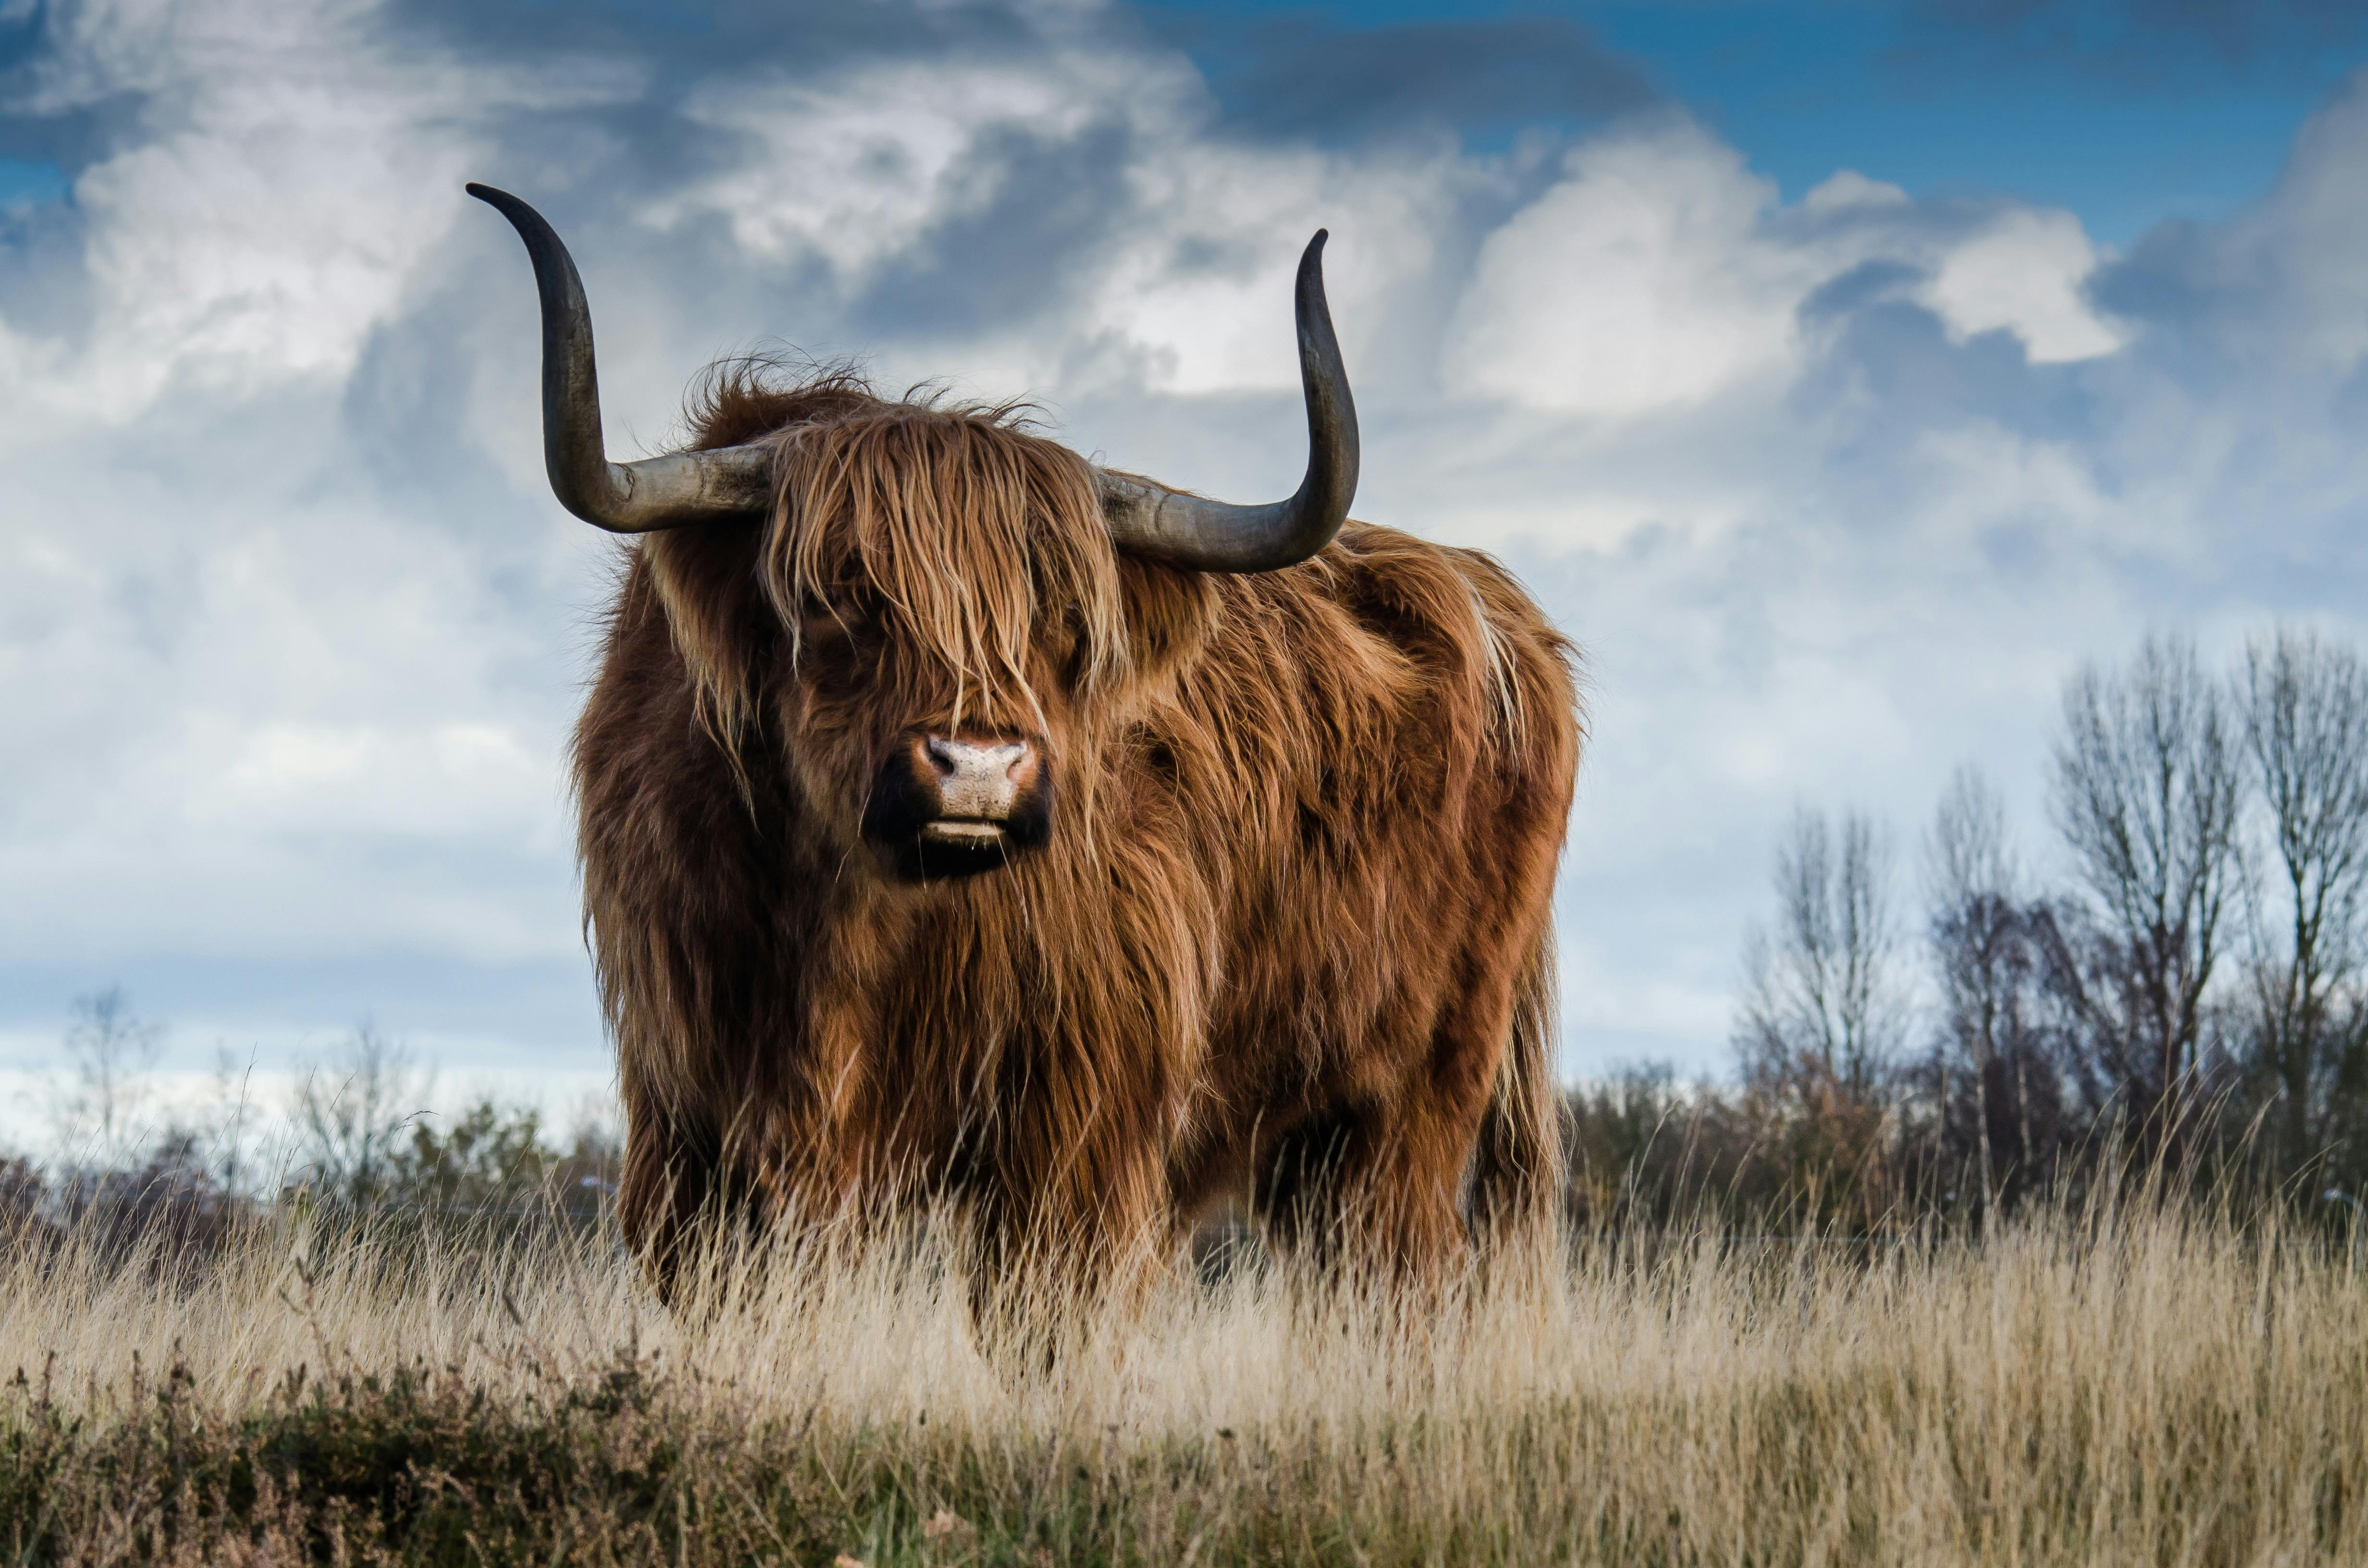 A big bull on a green field. | Photo: Pexels